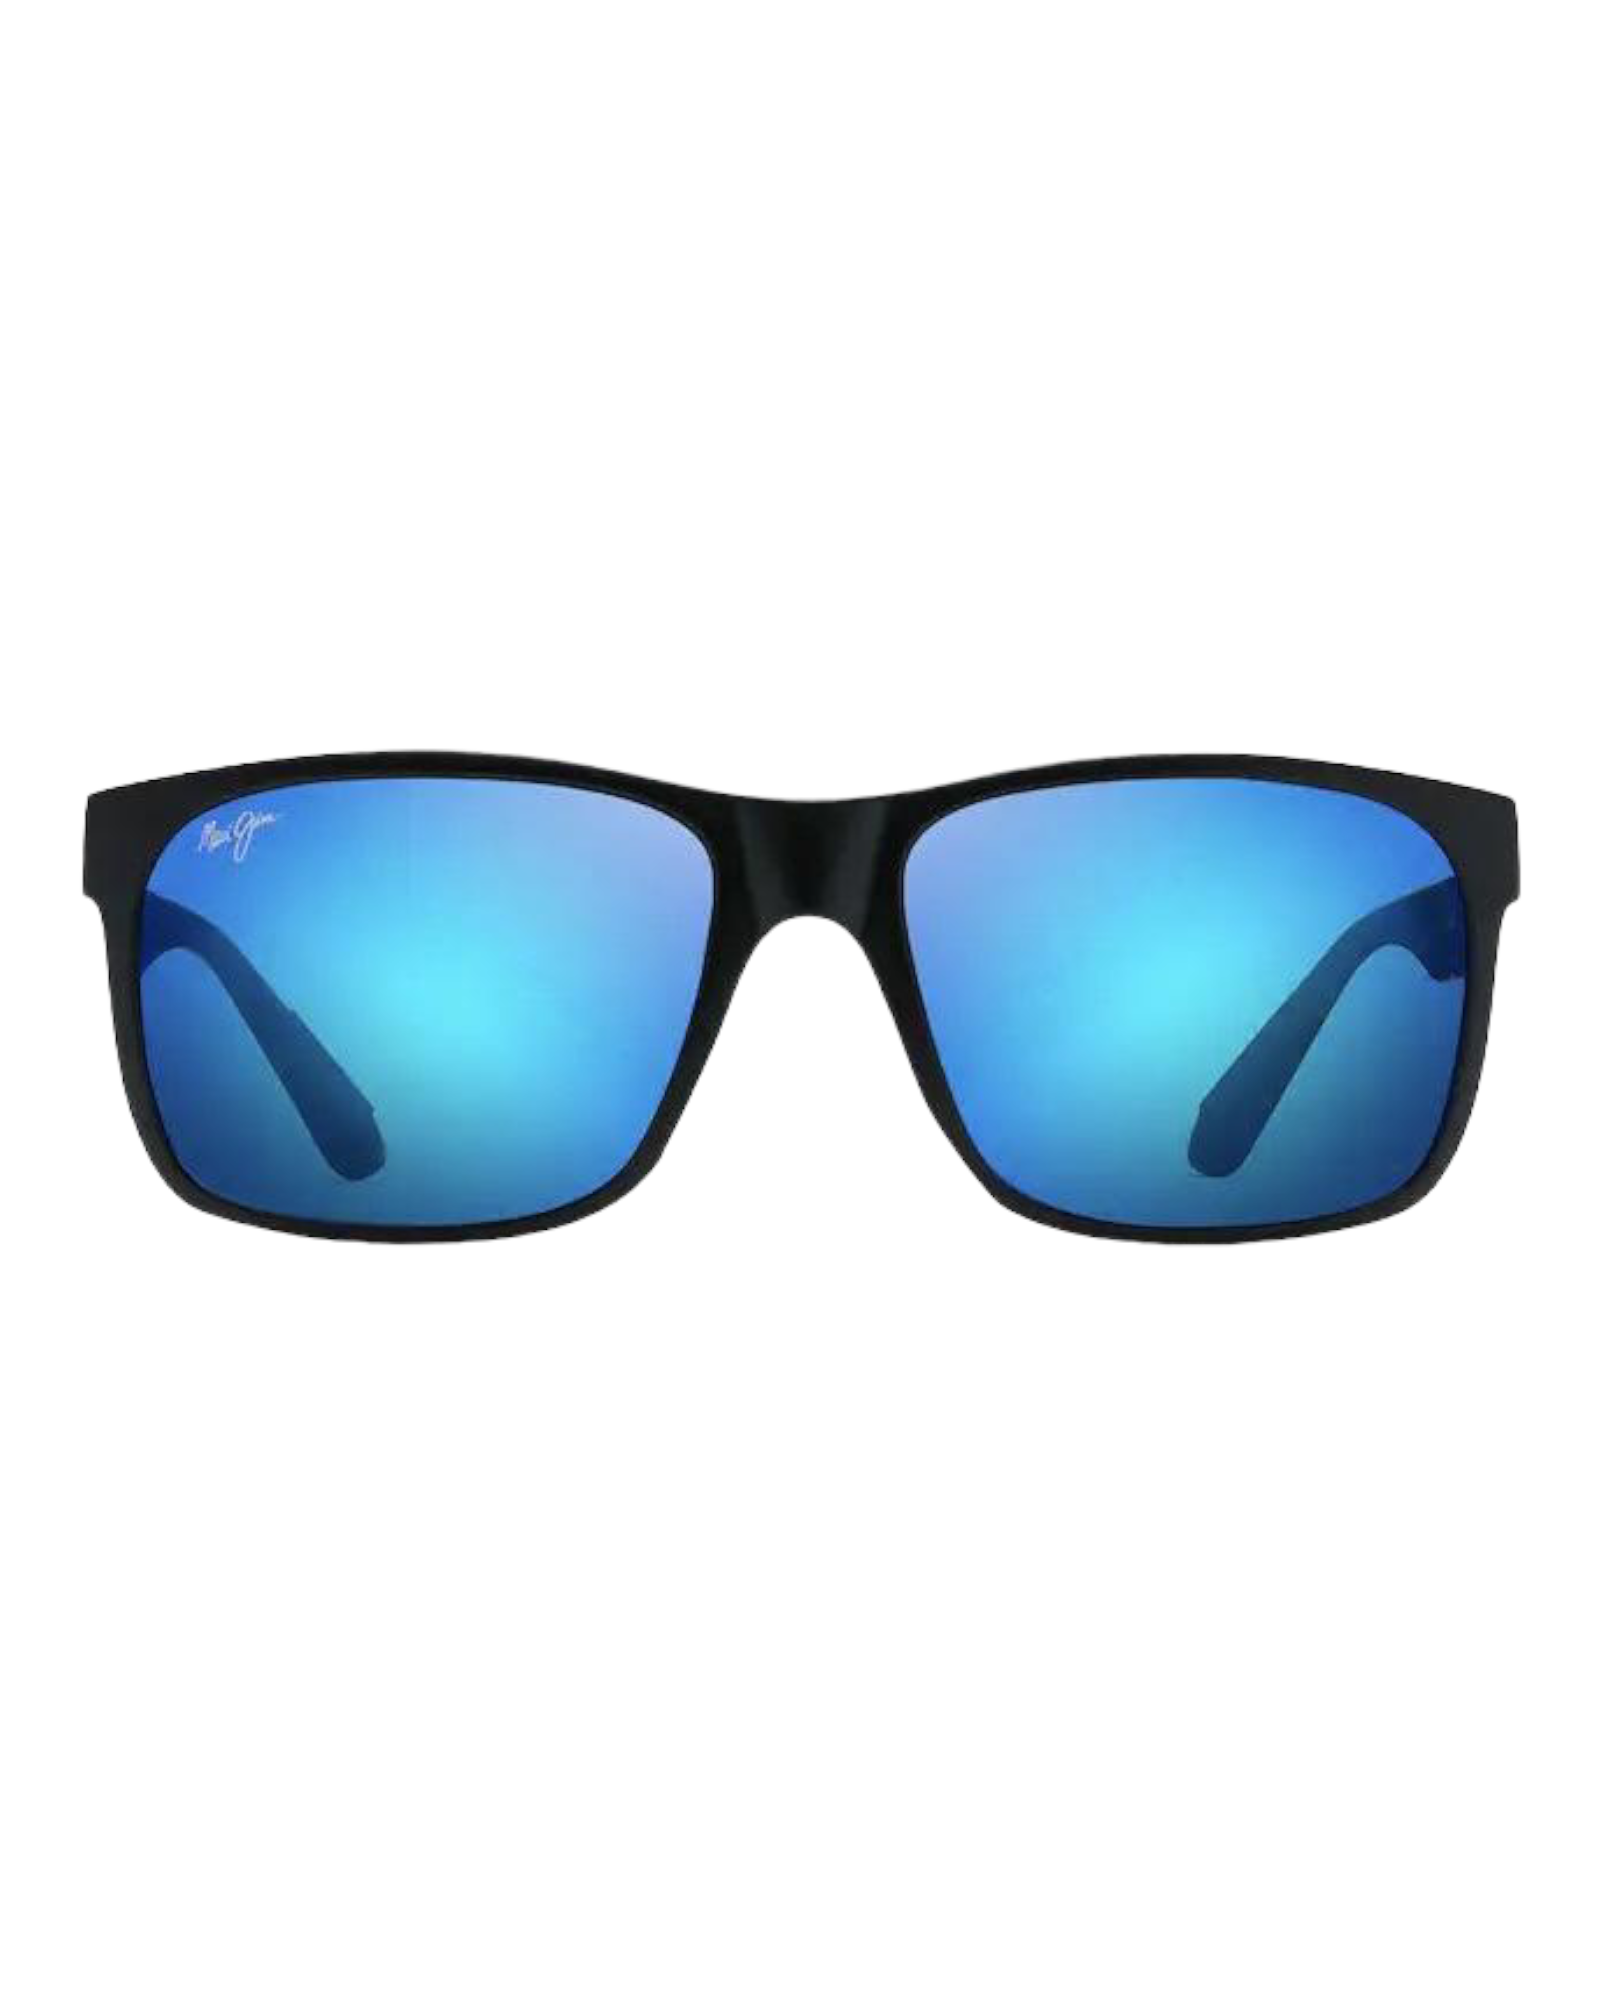 Maui Jim Blue Red Sands Polarized Sunglasses.